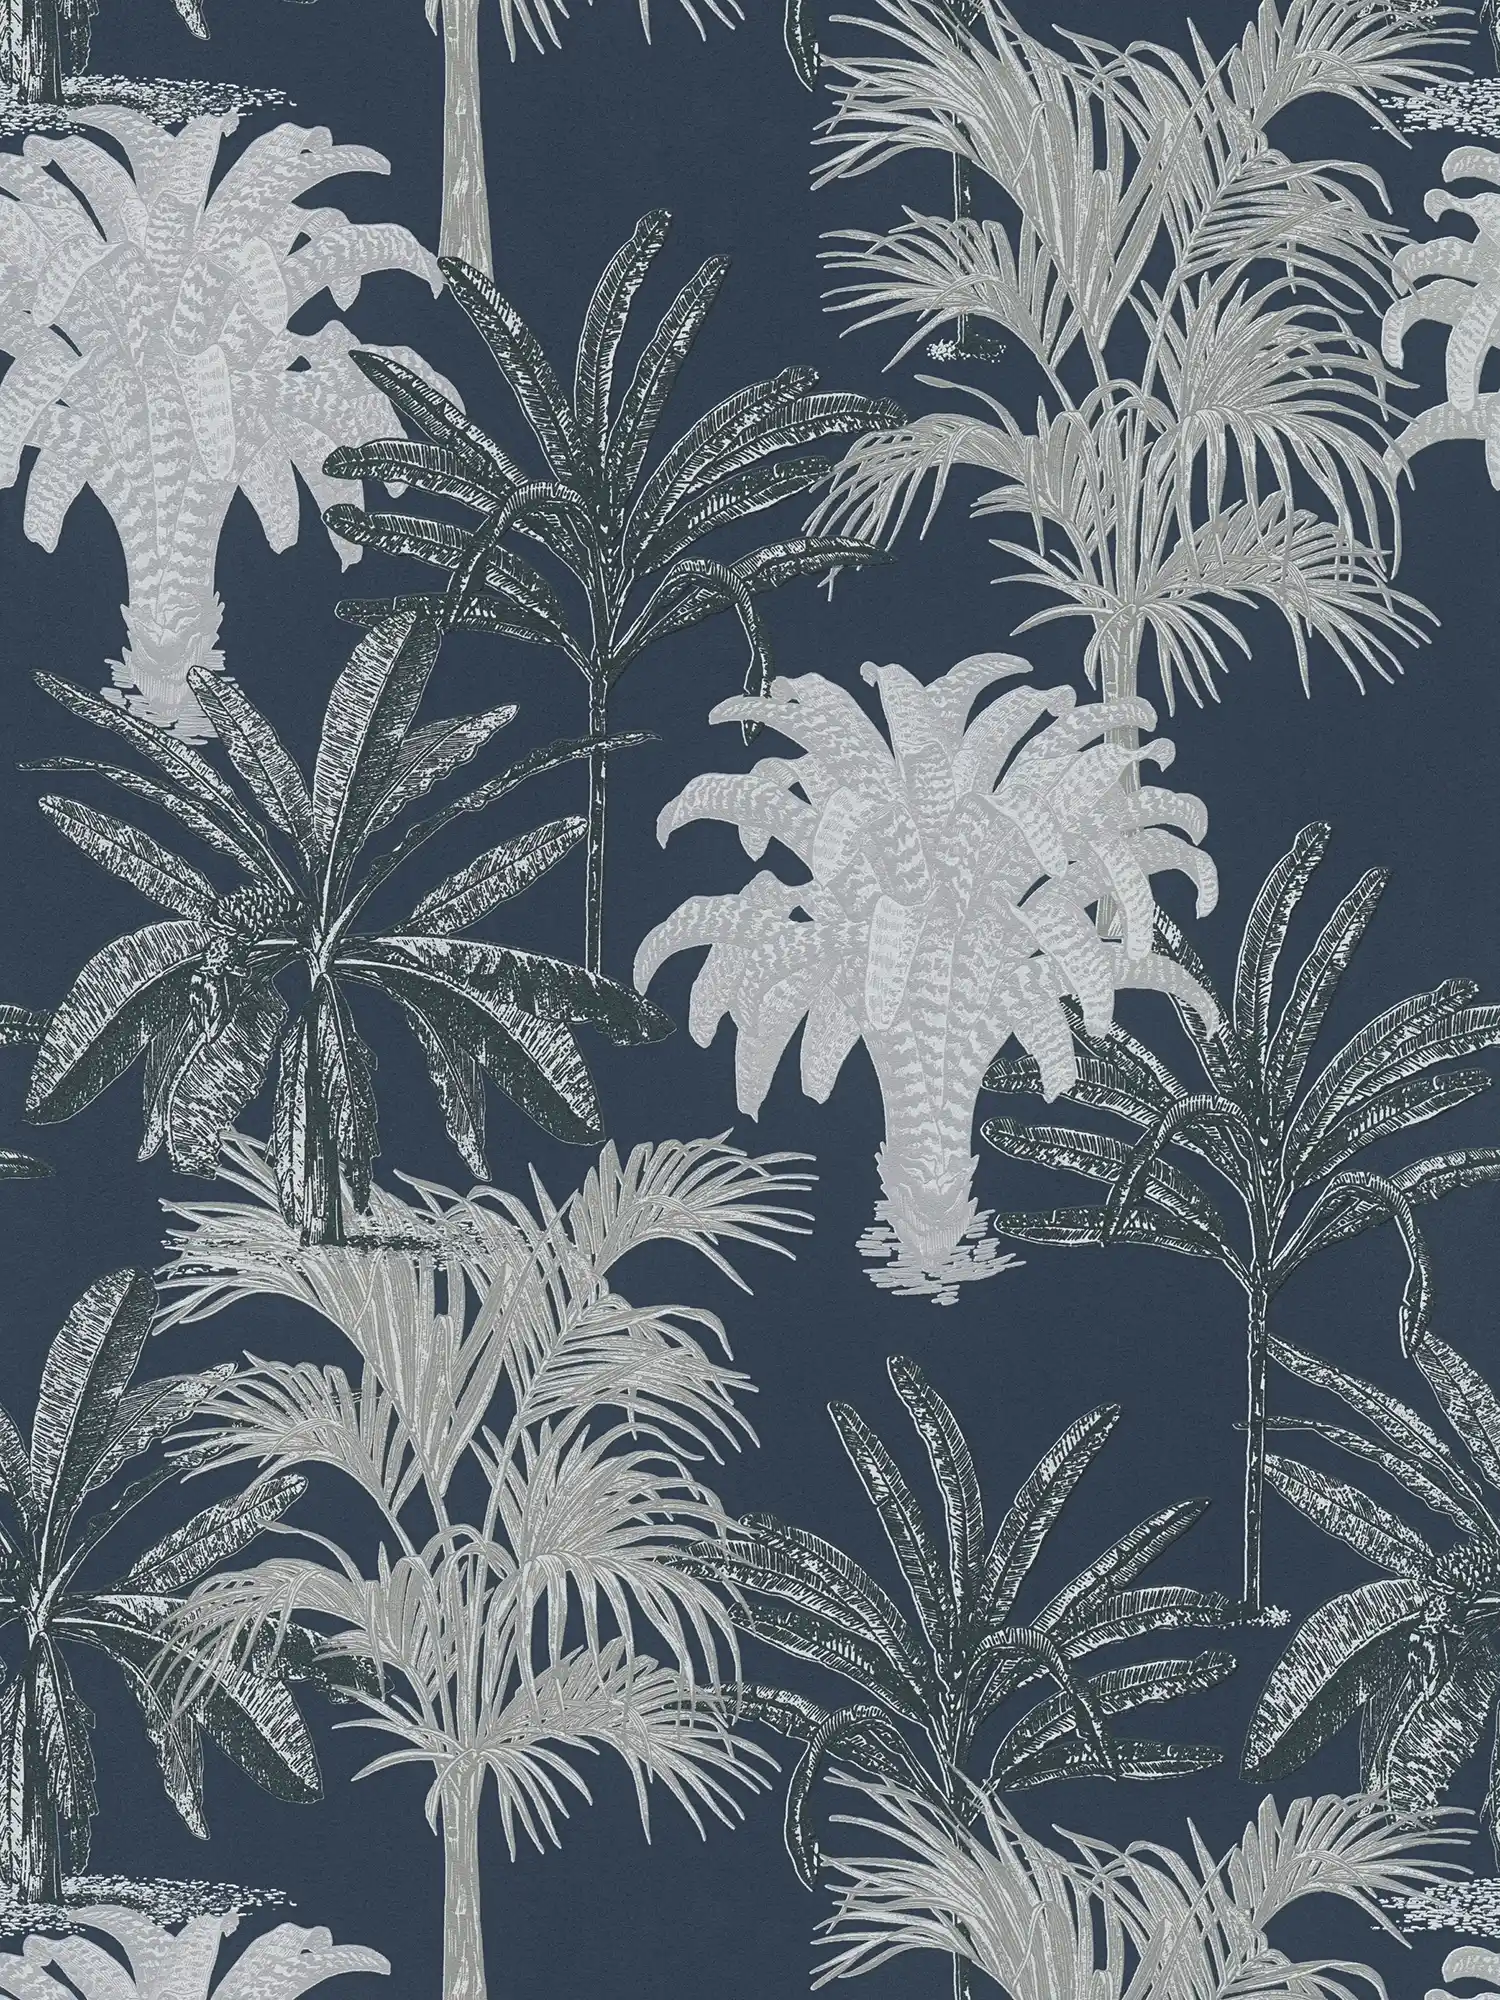 Palm wallpaper MICHASLKY dark blue with textured pattern - blue, grey
